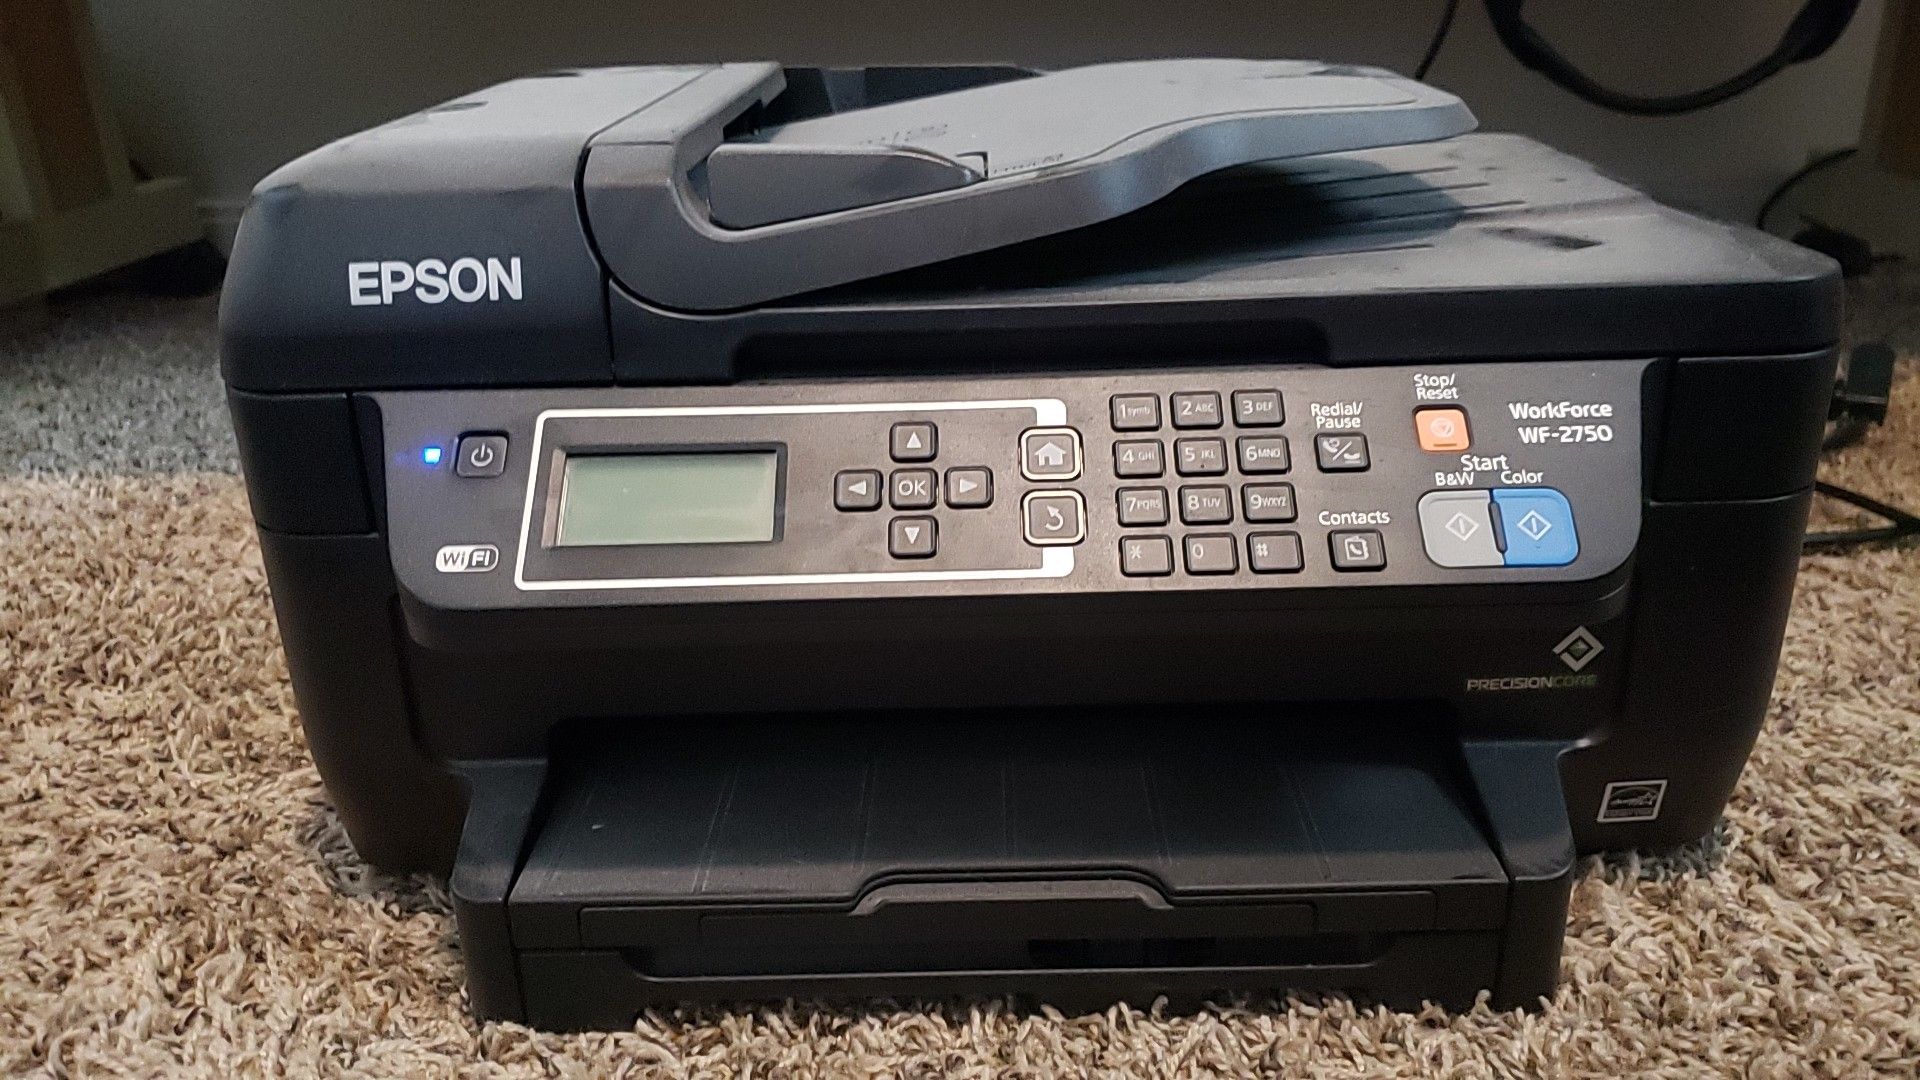 Epson printer, scanner, fax